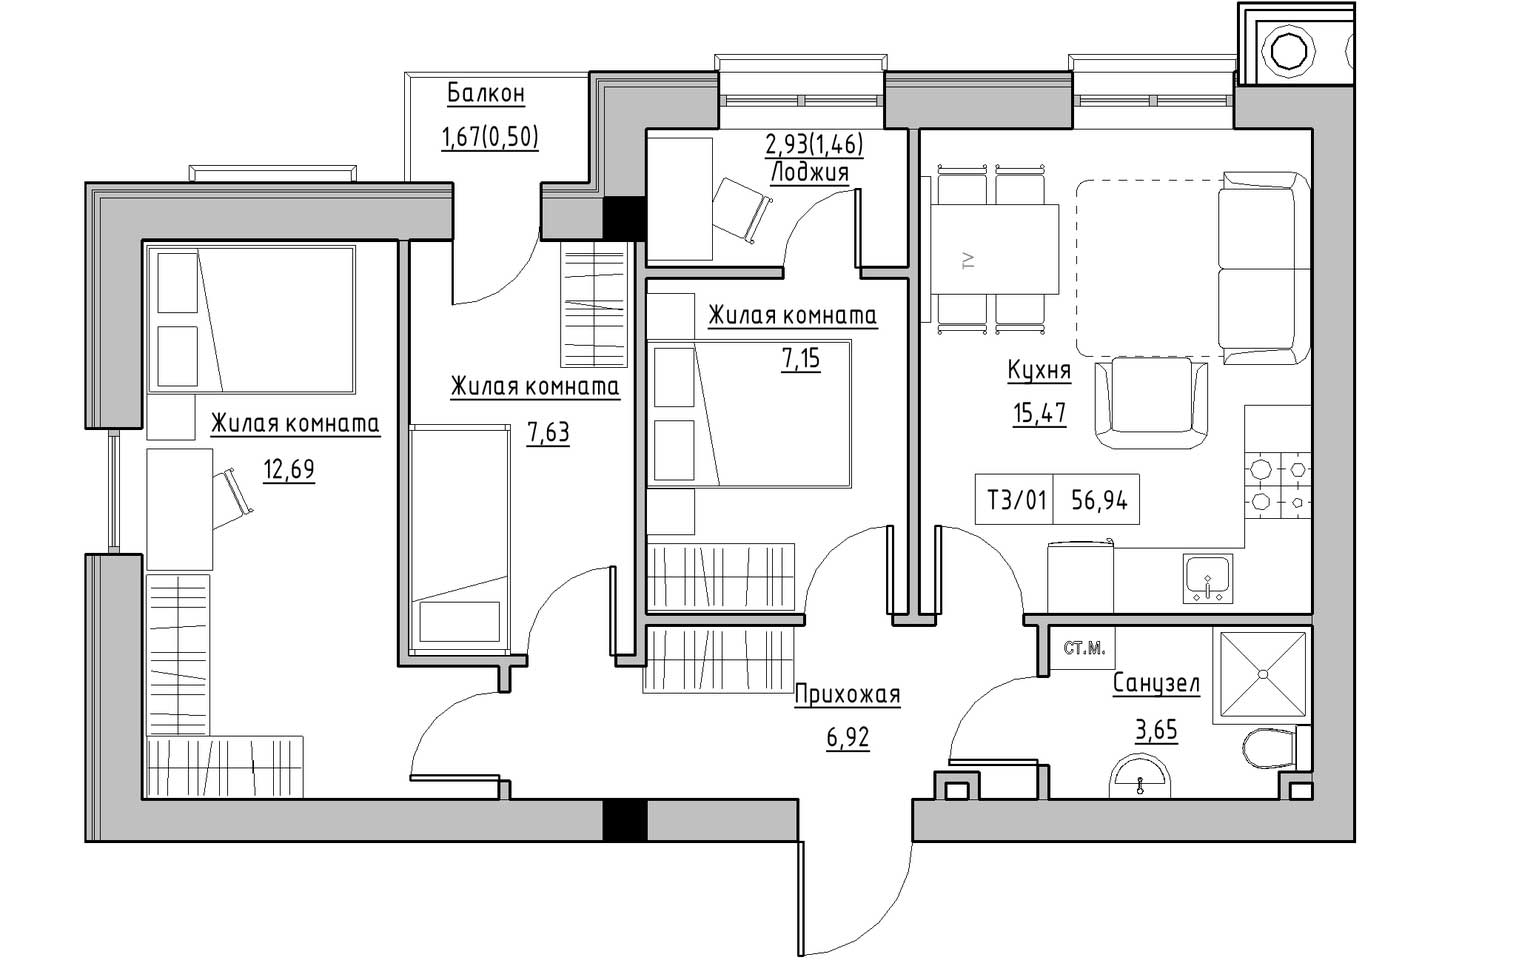 Planning 3-rm flats area 56.94m2, KS-009-02/0006.